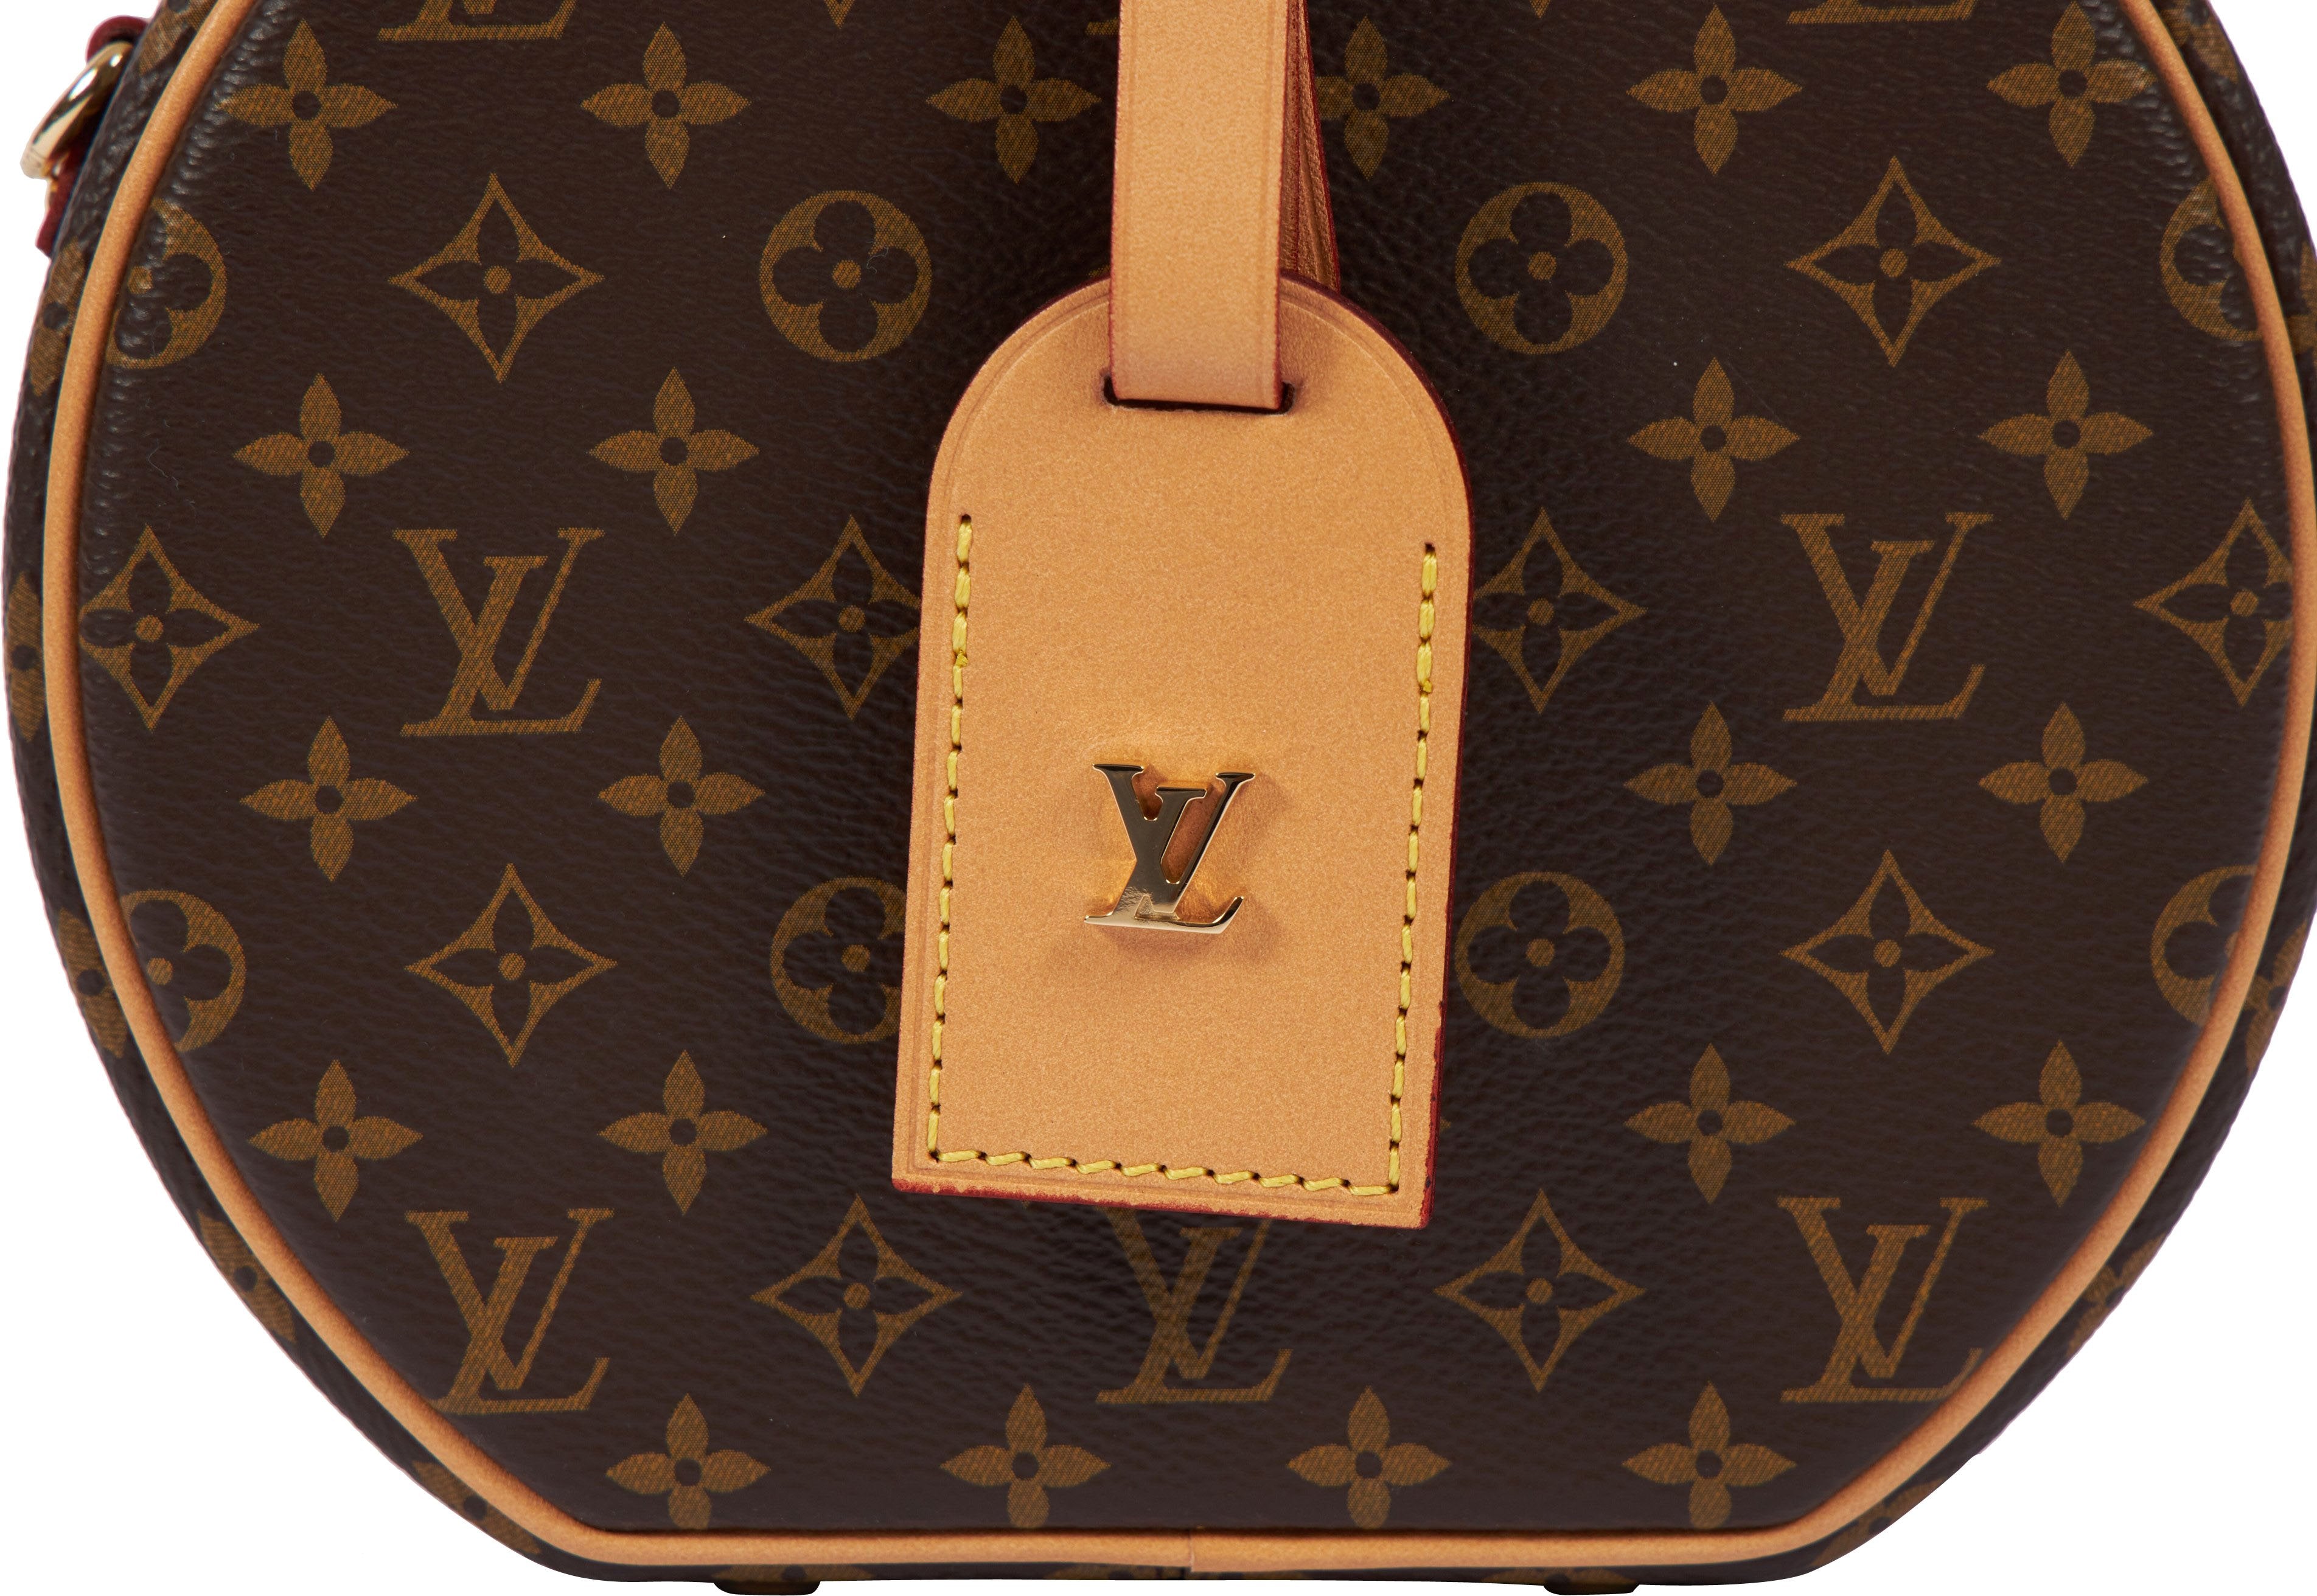 New in Box Vuitton Monogram Mini Hatbox